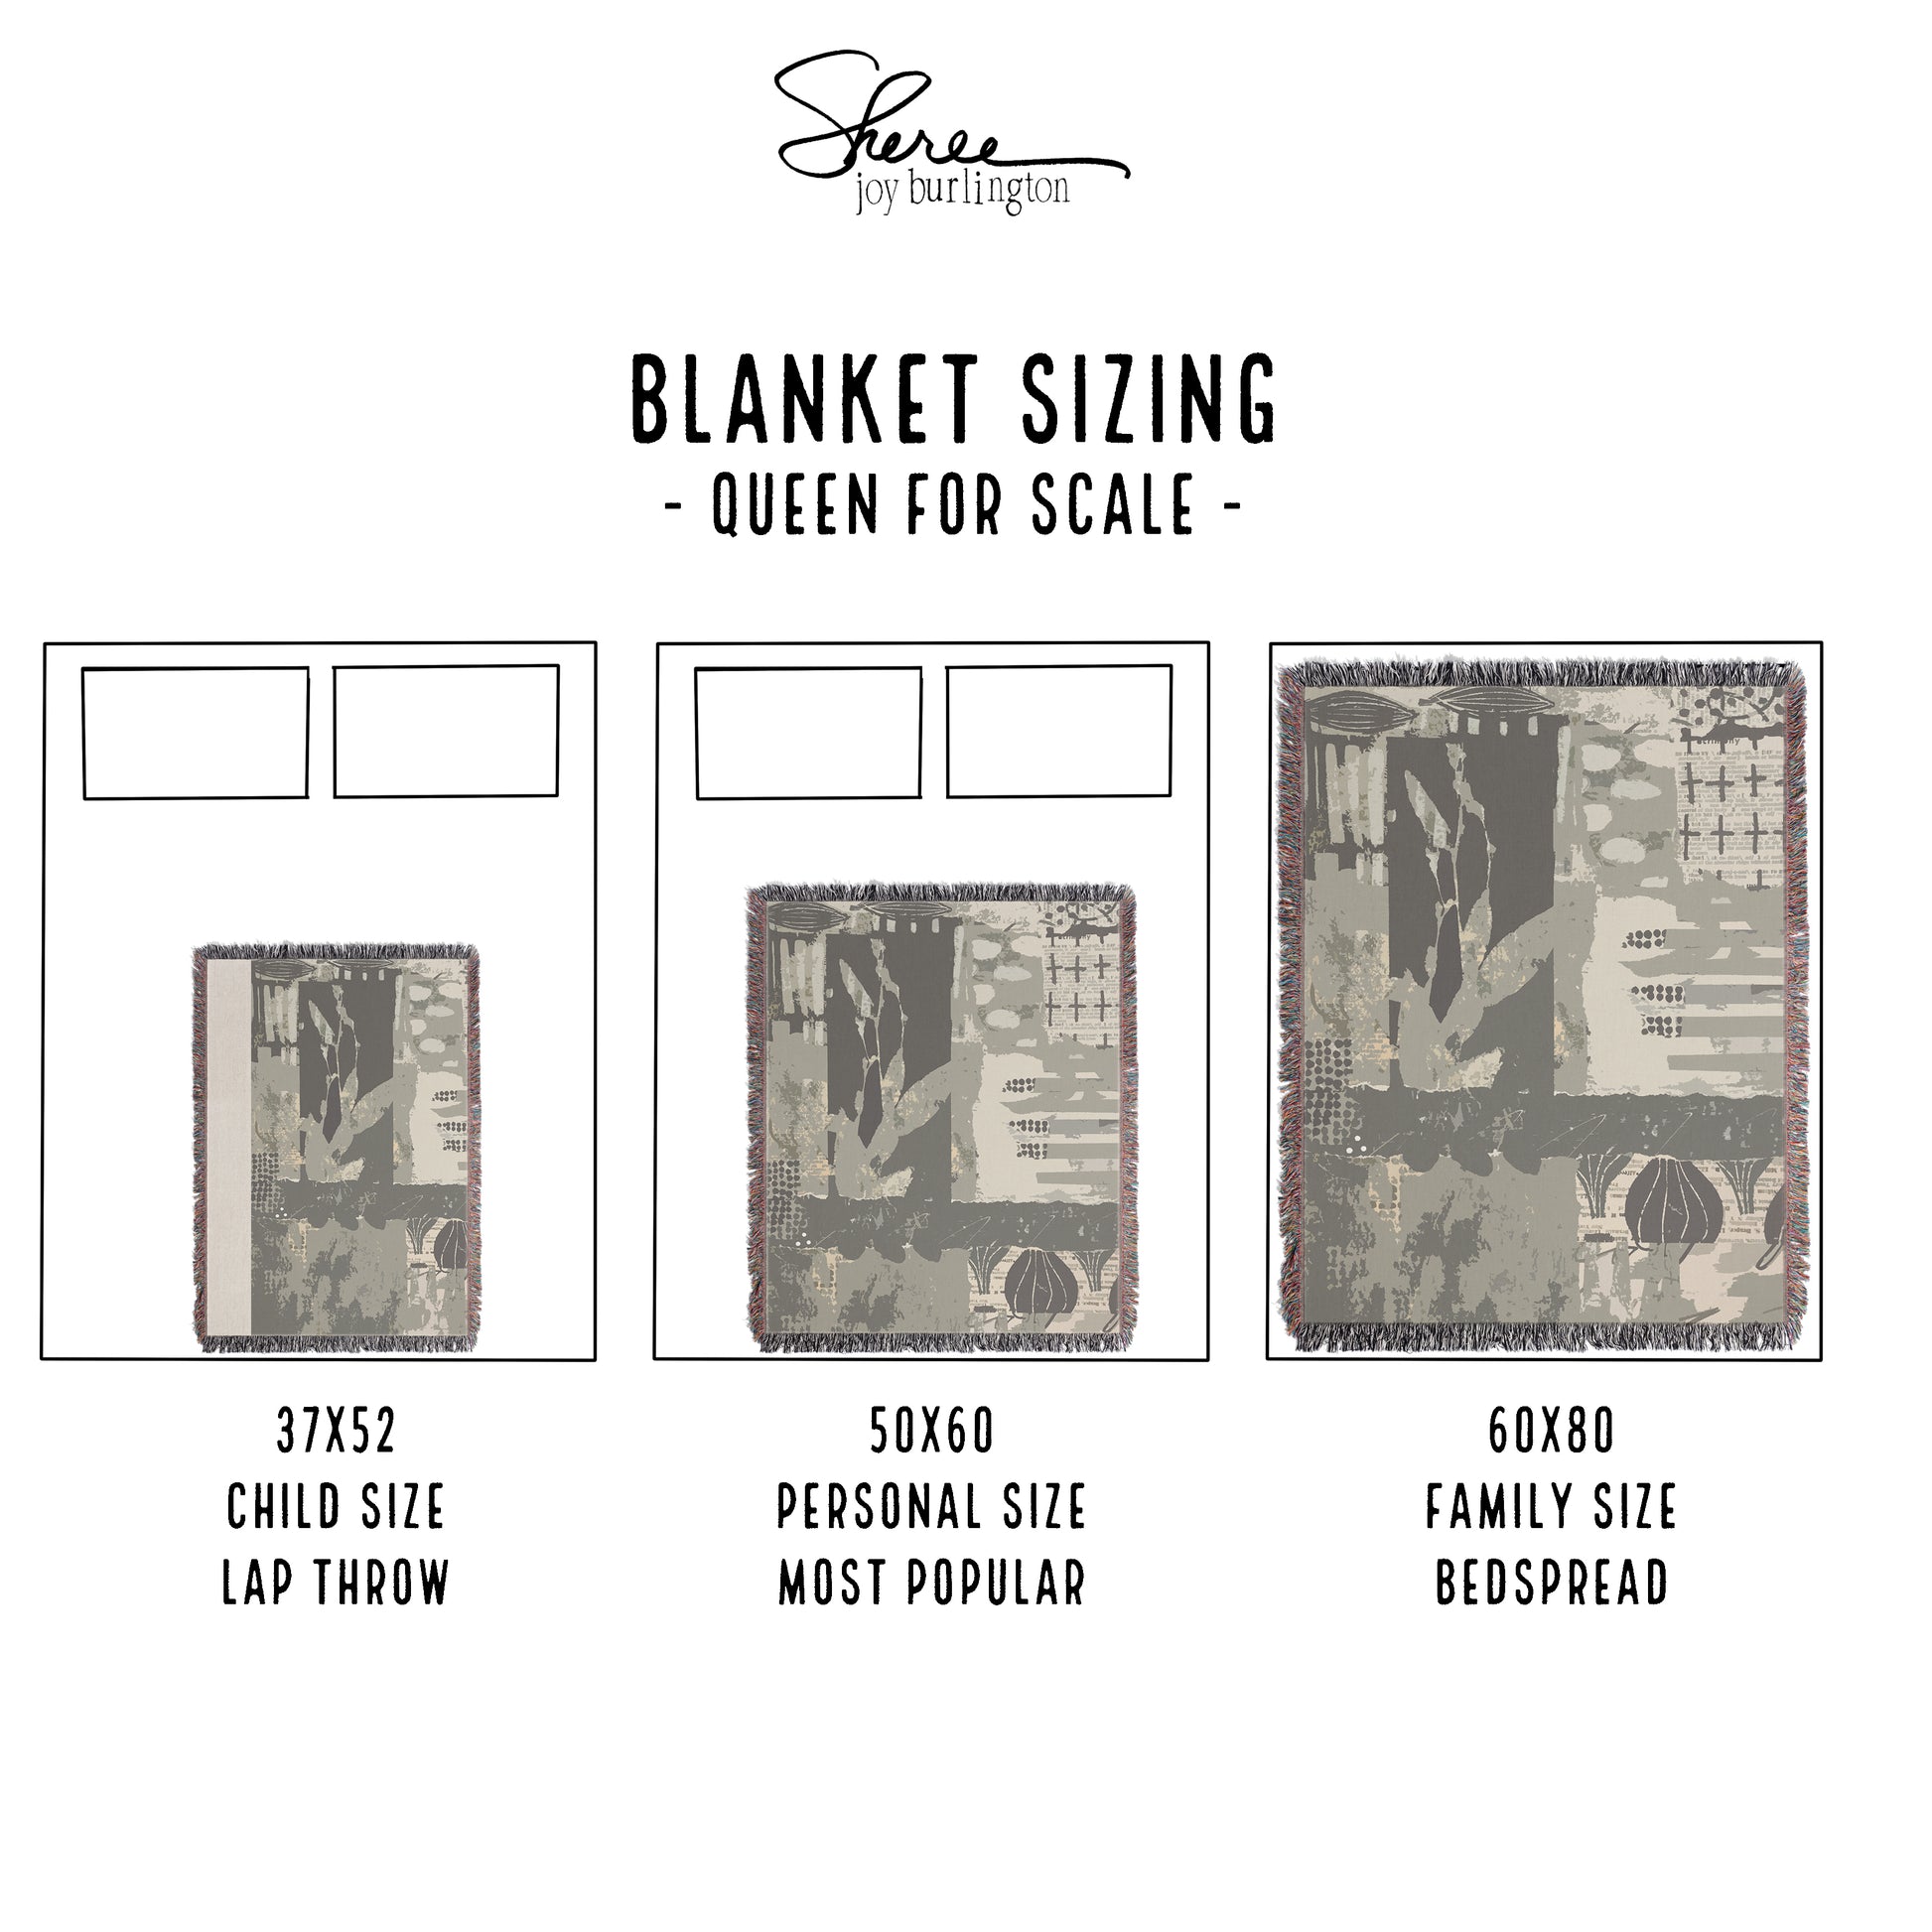 Personalized Woven Blanket Size Chart by Museware designer Sheree Burlington